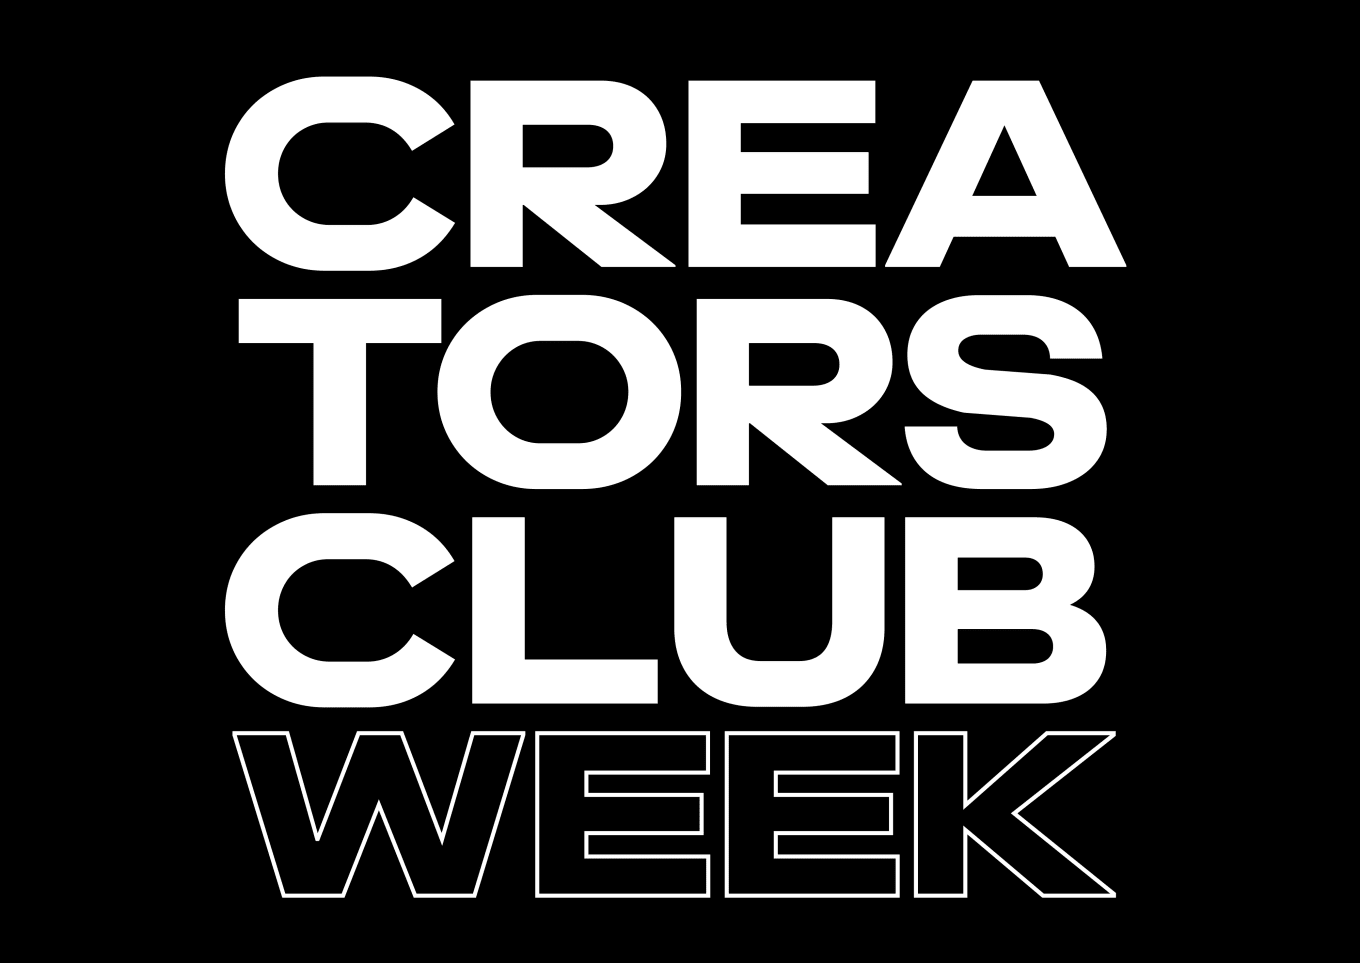 Adidas Creators Club Week Event 